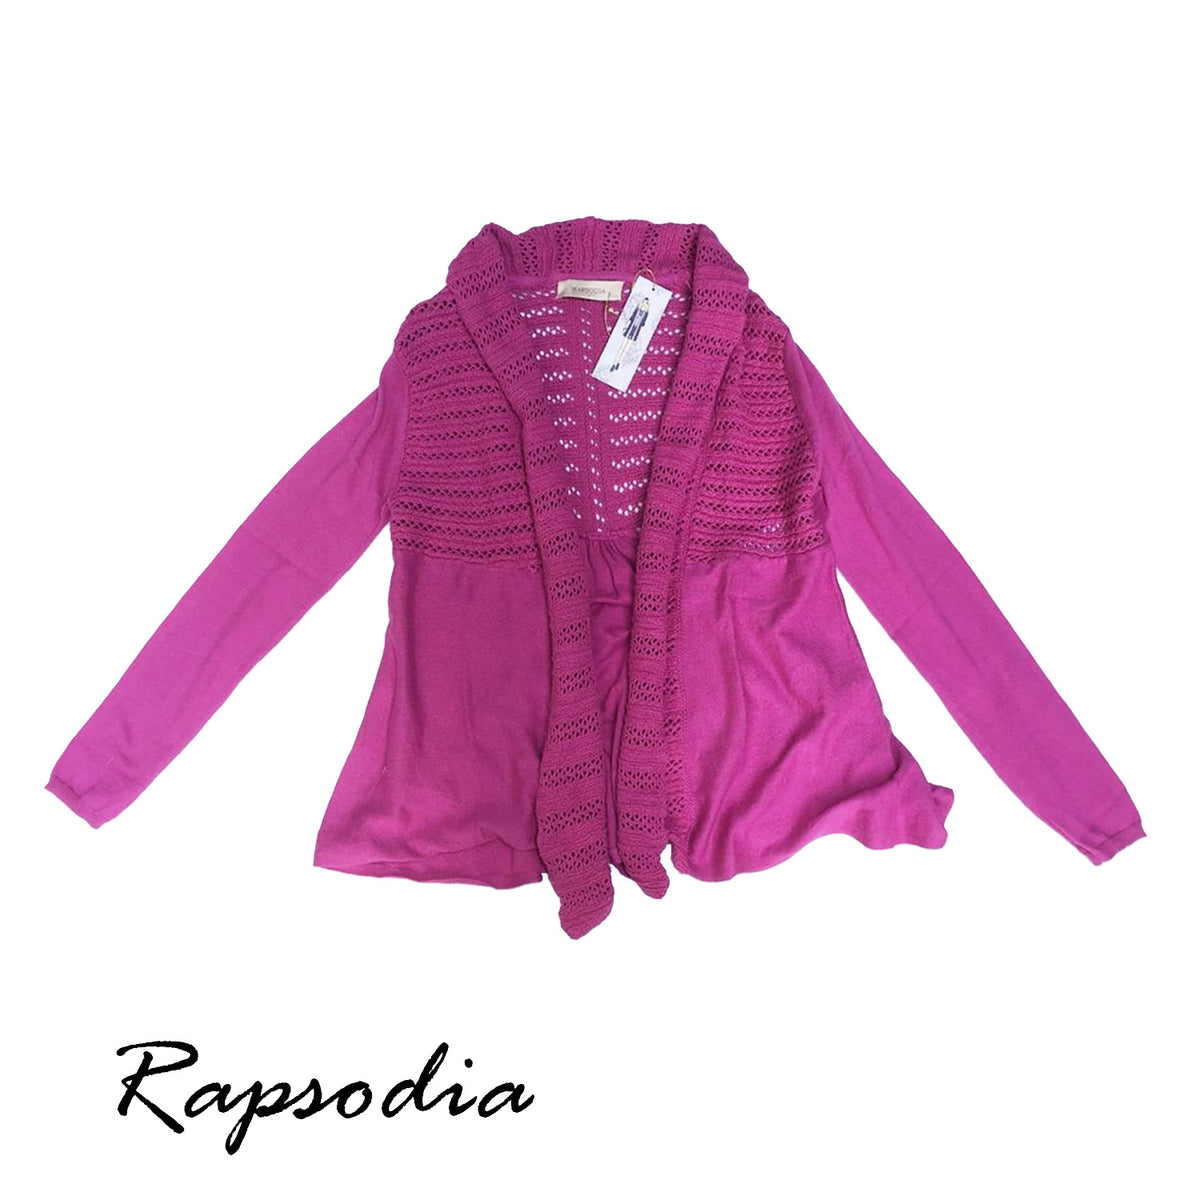 Sweater Rapsodia Caleida Rosa